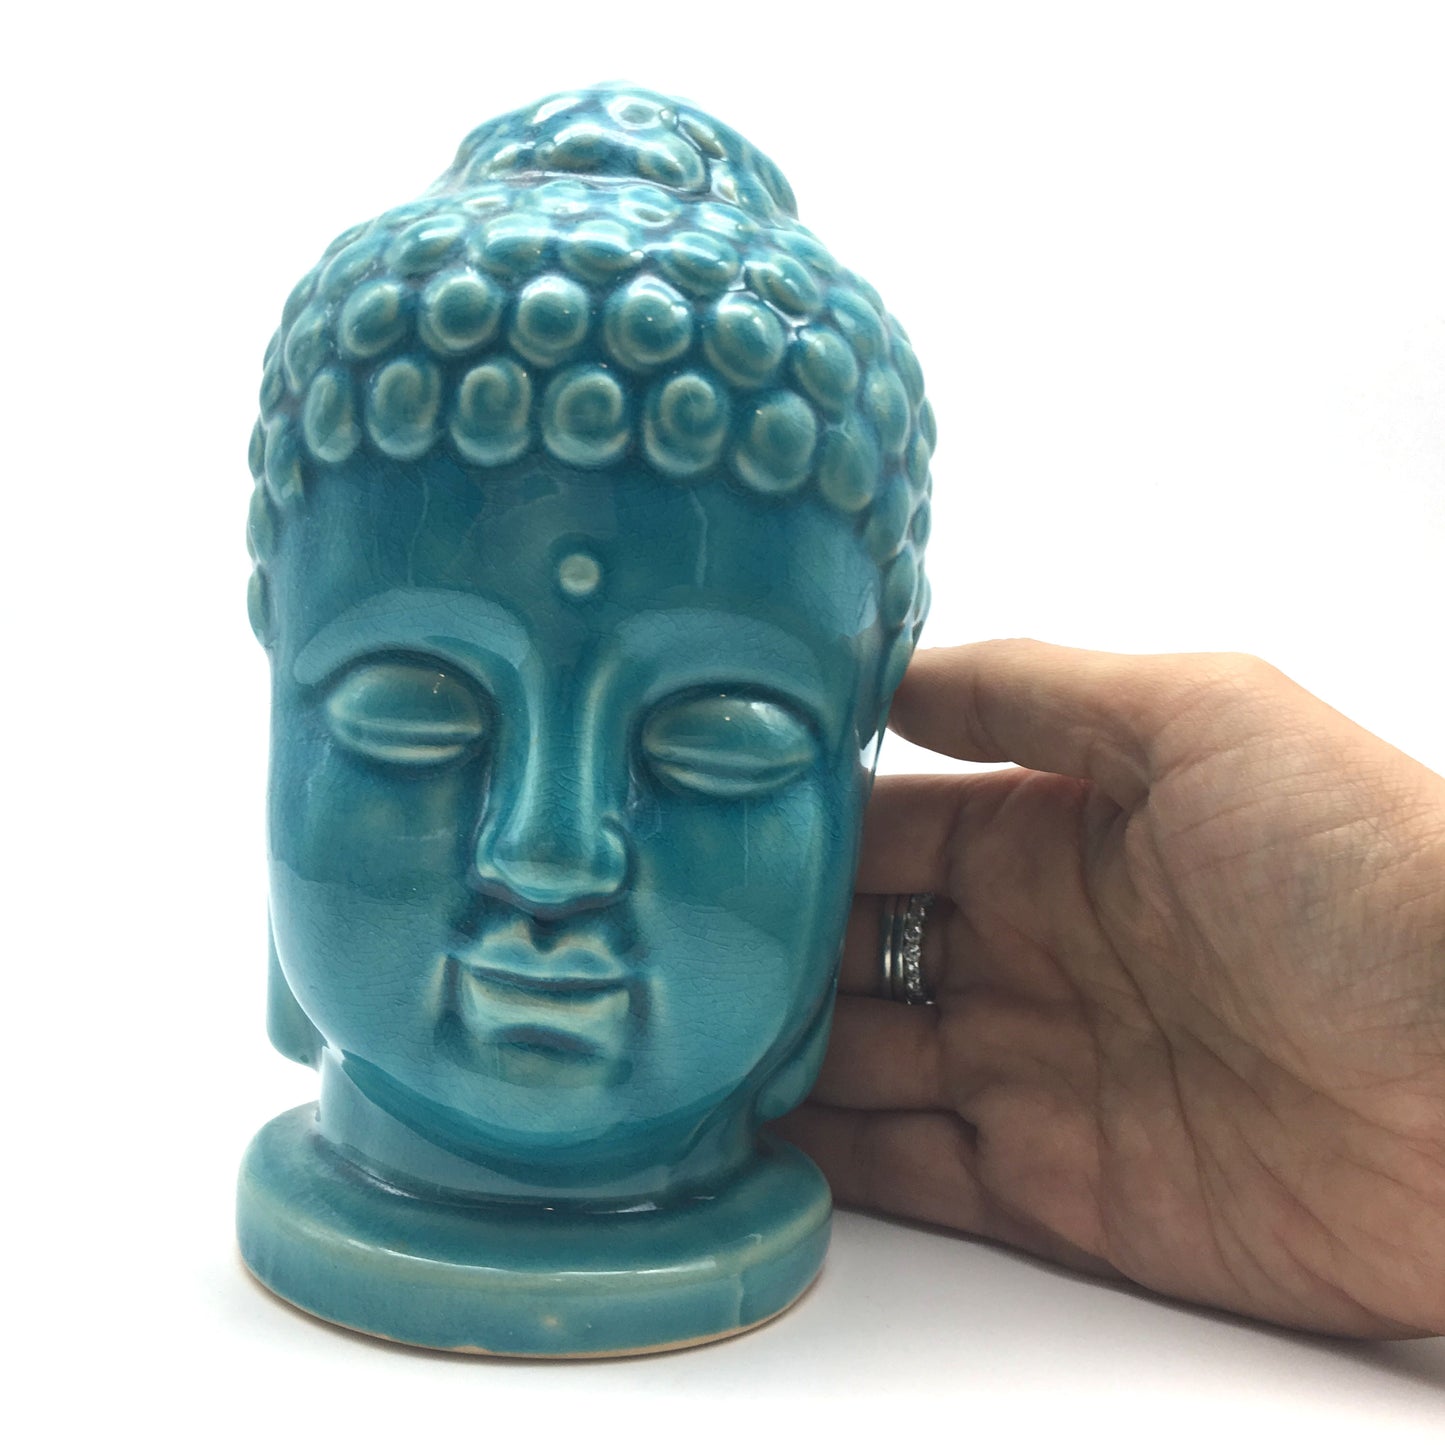 Ceramic Crackle Glaze Buddhism ShakyaMuni Buddha Head Sculpture Statue 6.5" - Montecinos Ethnic